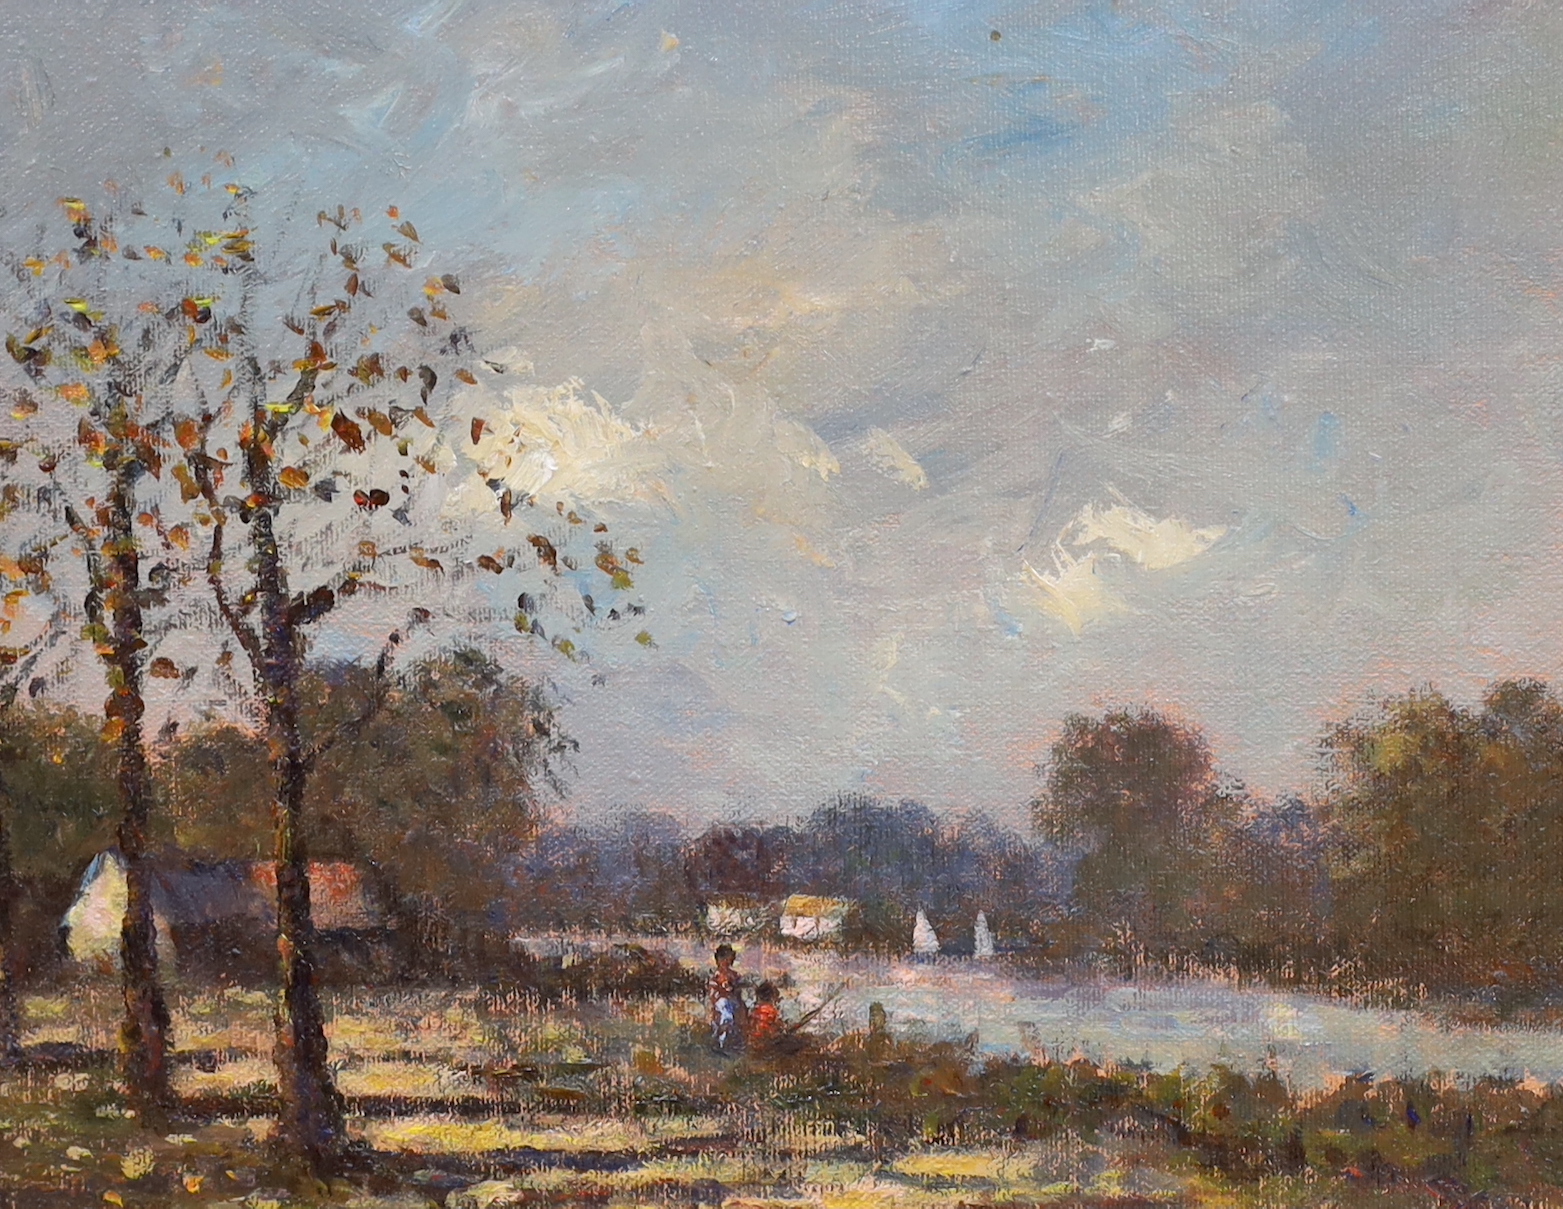 Donald Stockton-Smith (20th. C), oil on canvas, River landscape, signed, 24 x 29cm